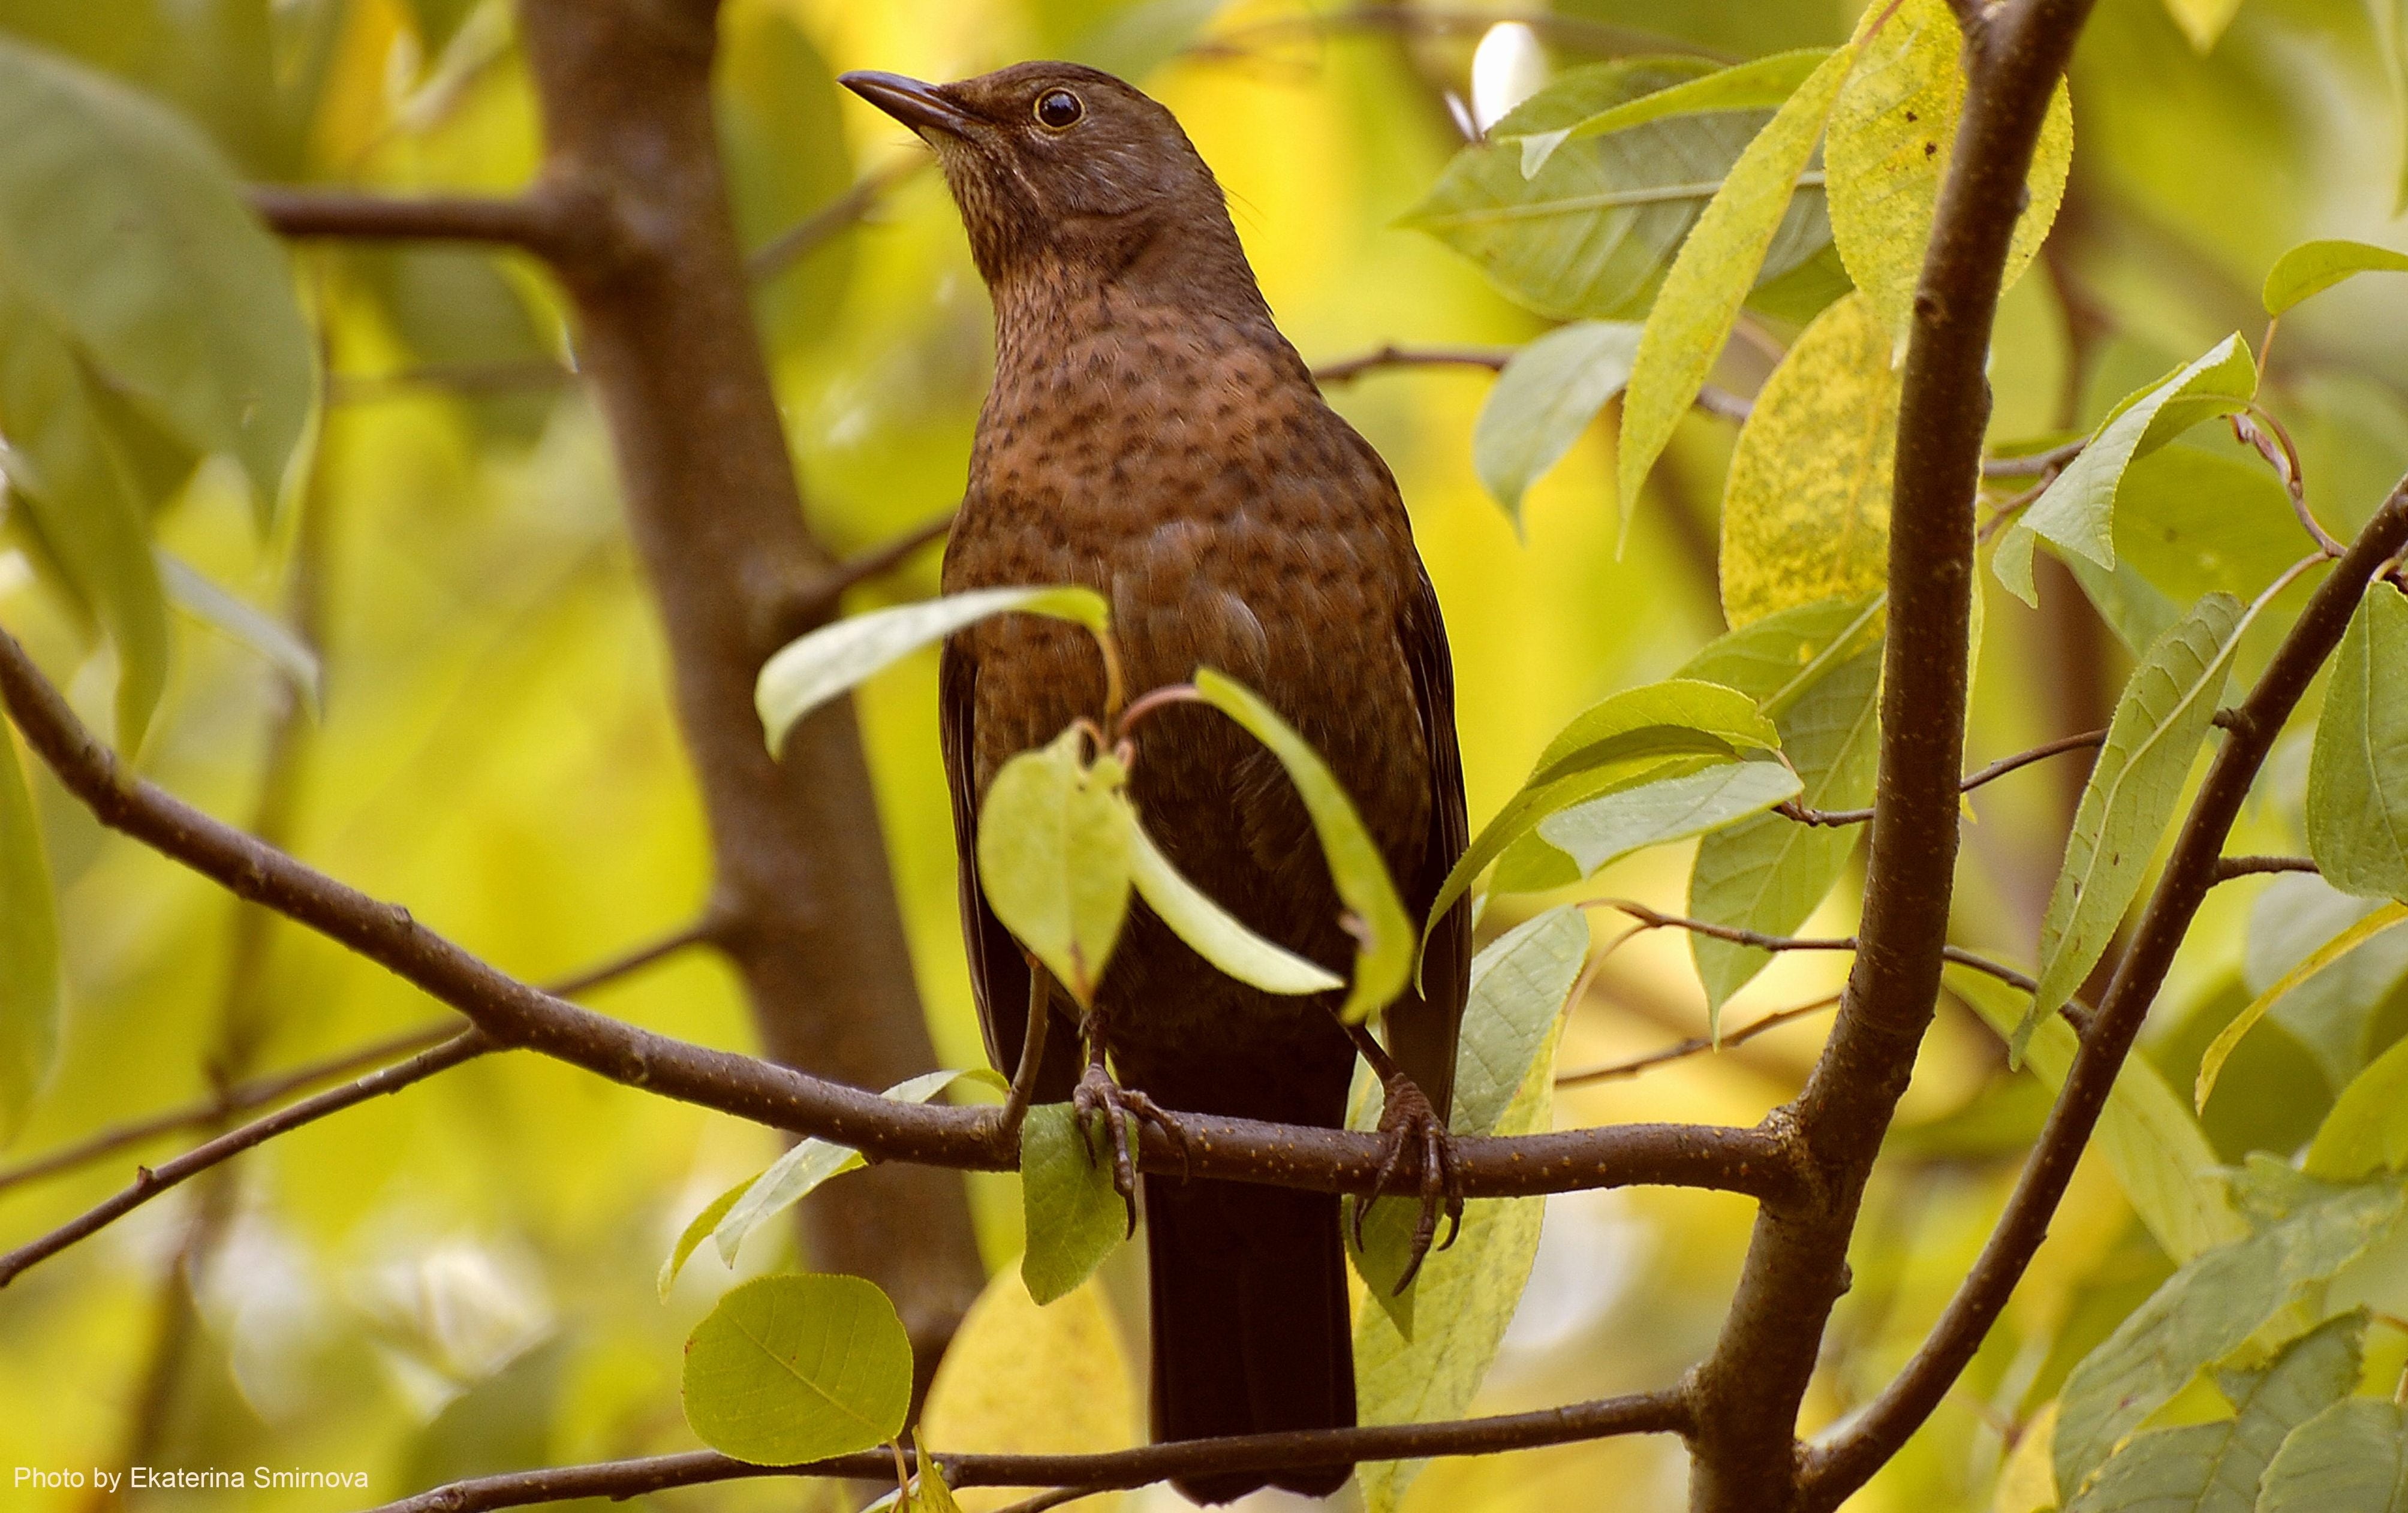 brown long-beaked bird on tree trunk